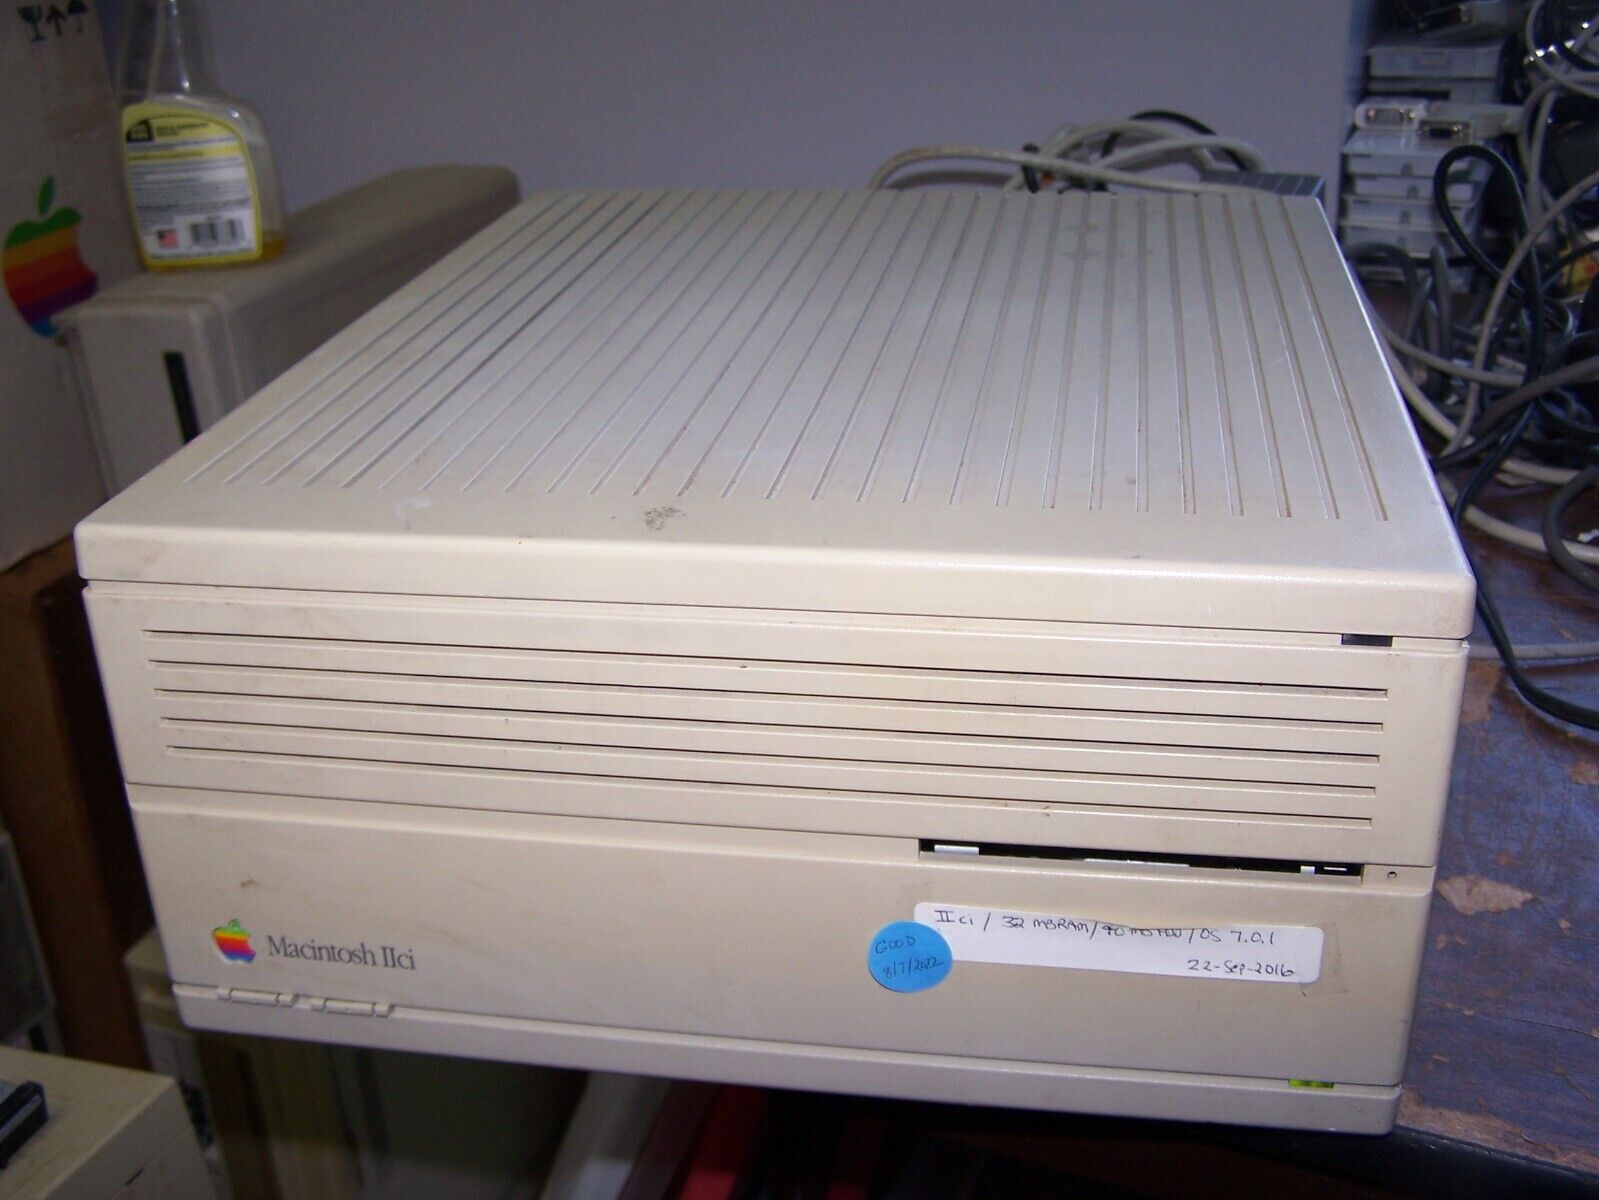 Apple Macintosh IIci Computer SOLD AS IS